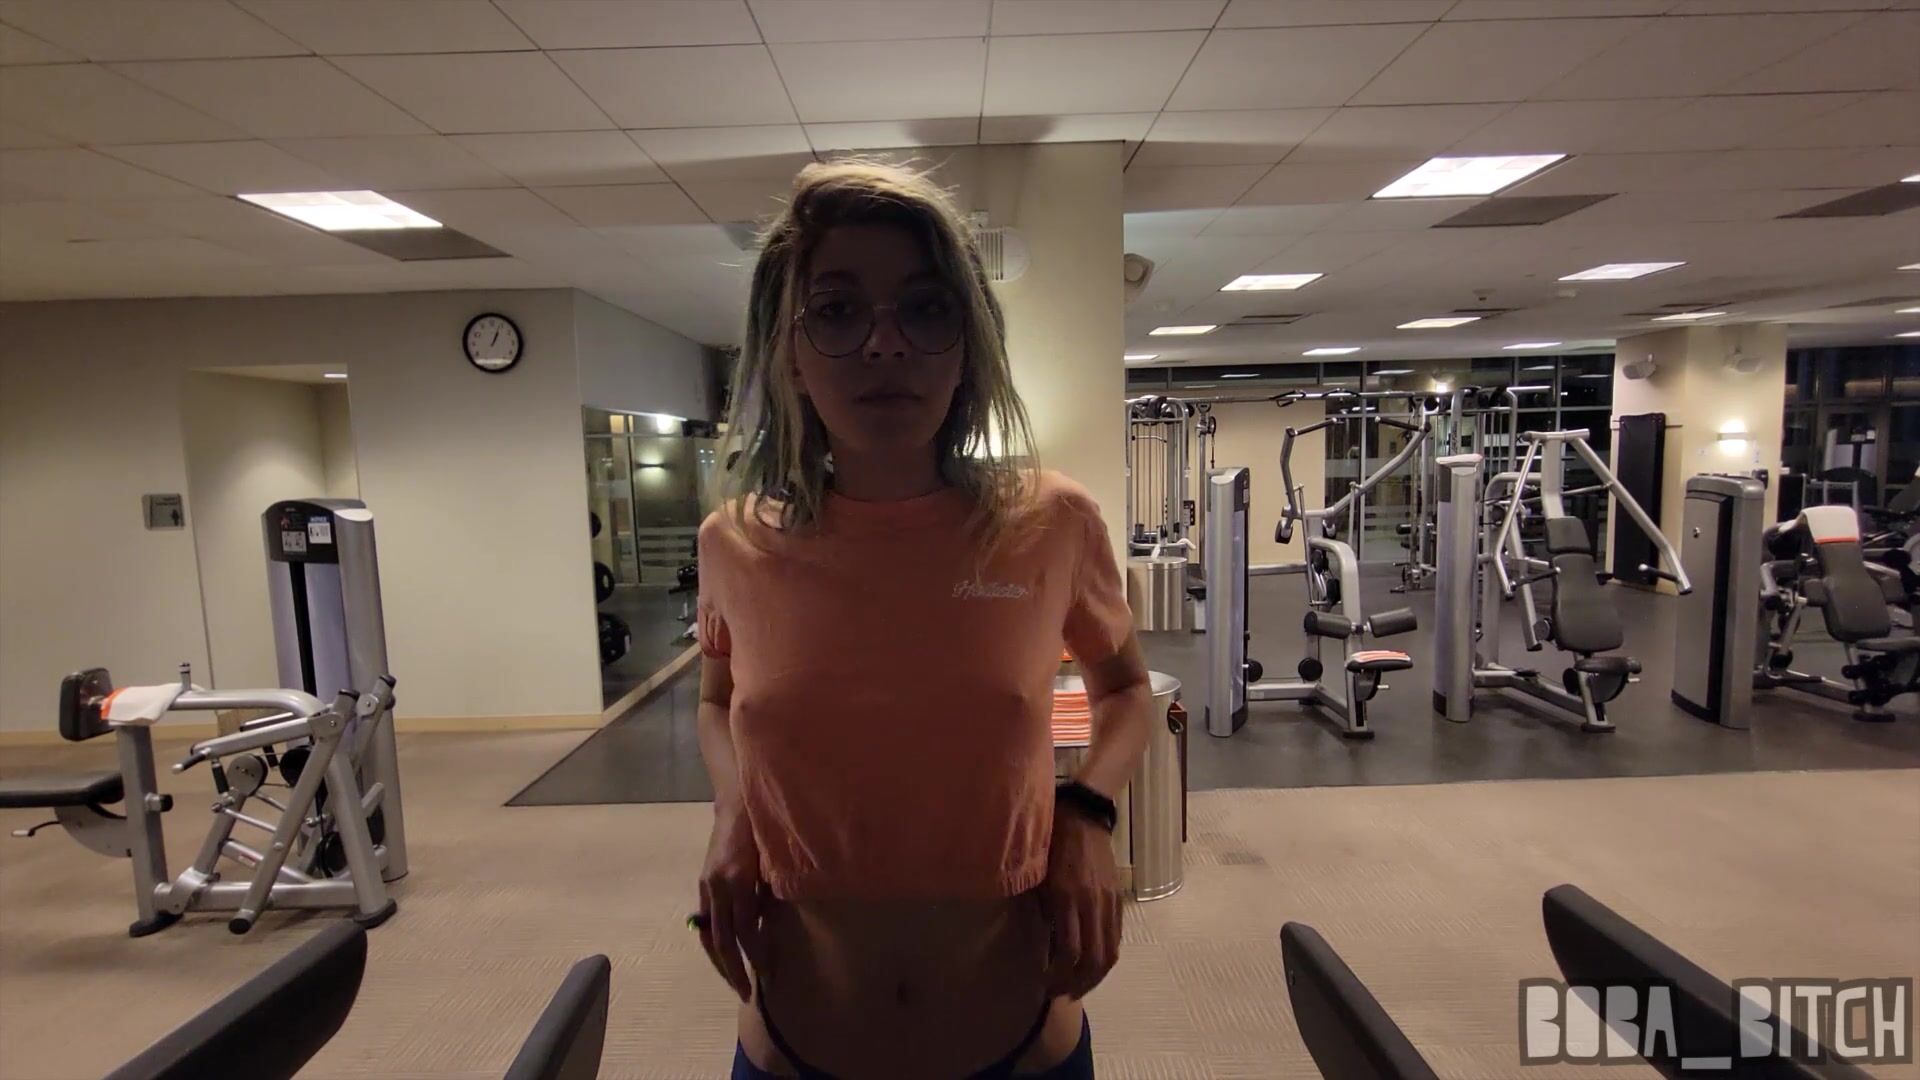 Boba Bitch Caught Nude Gym Workout Hotel Walk